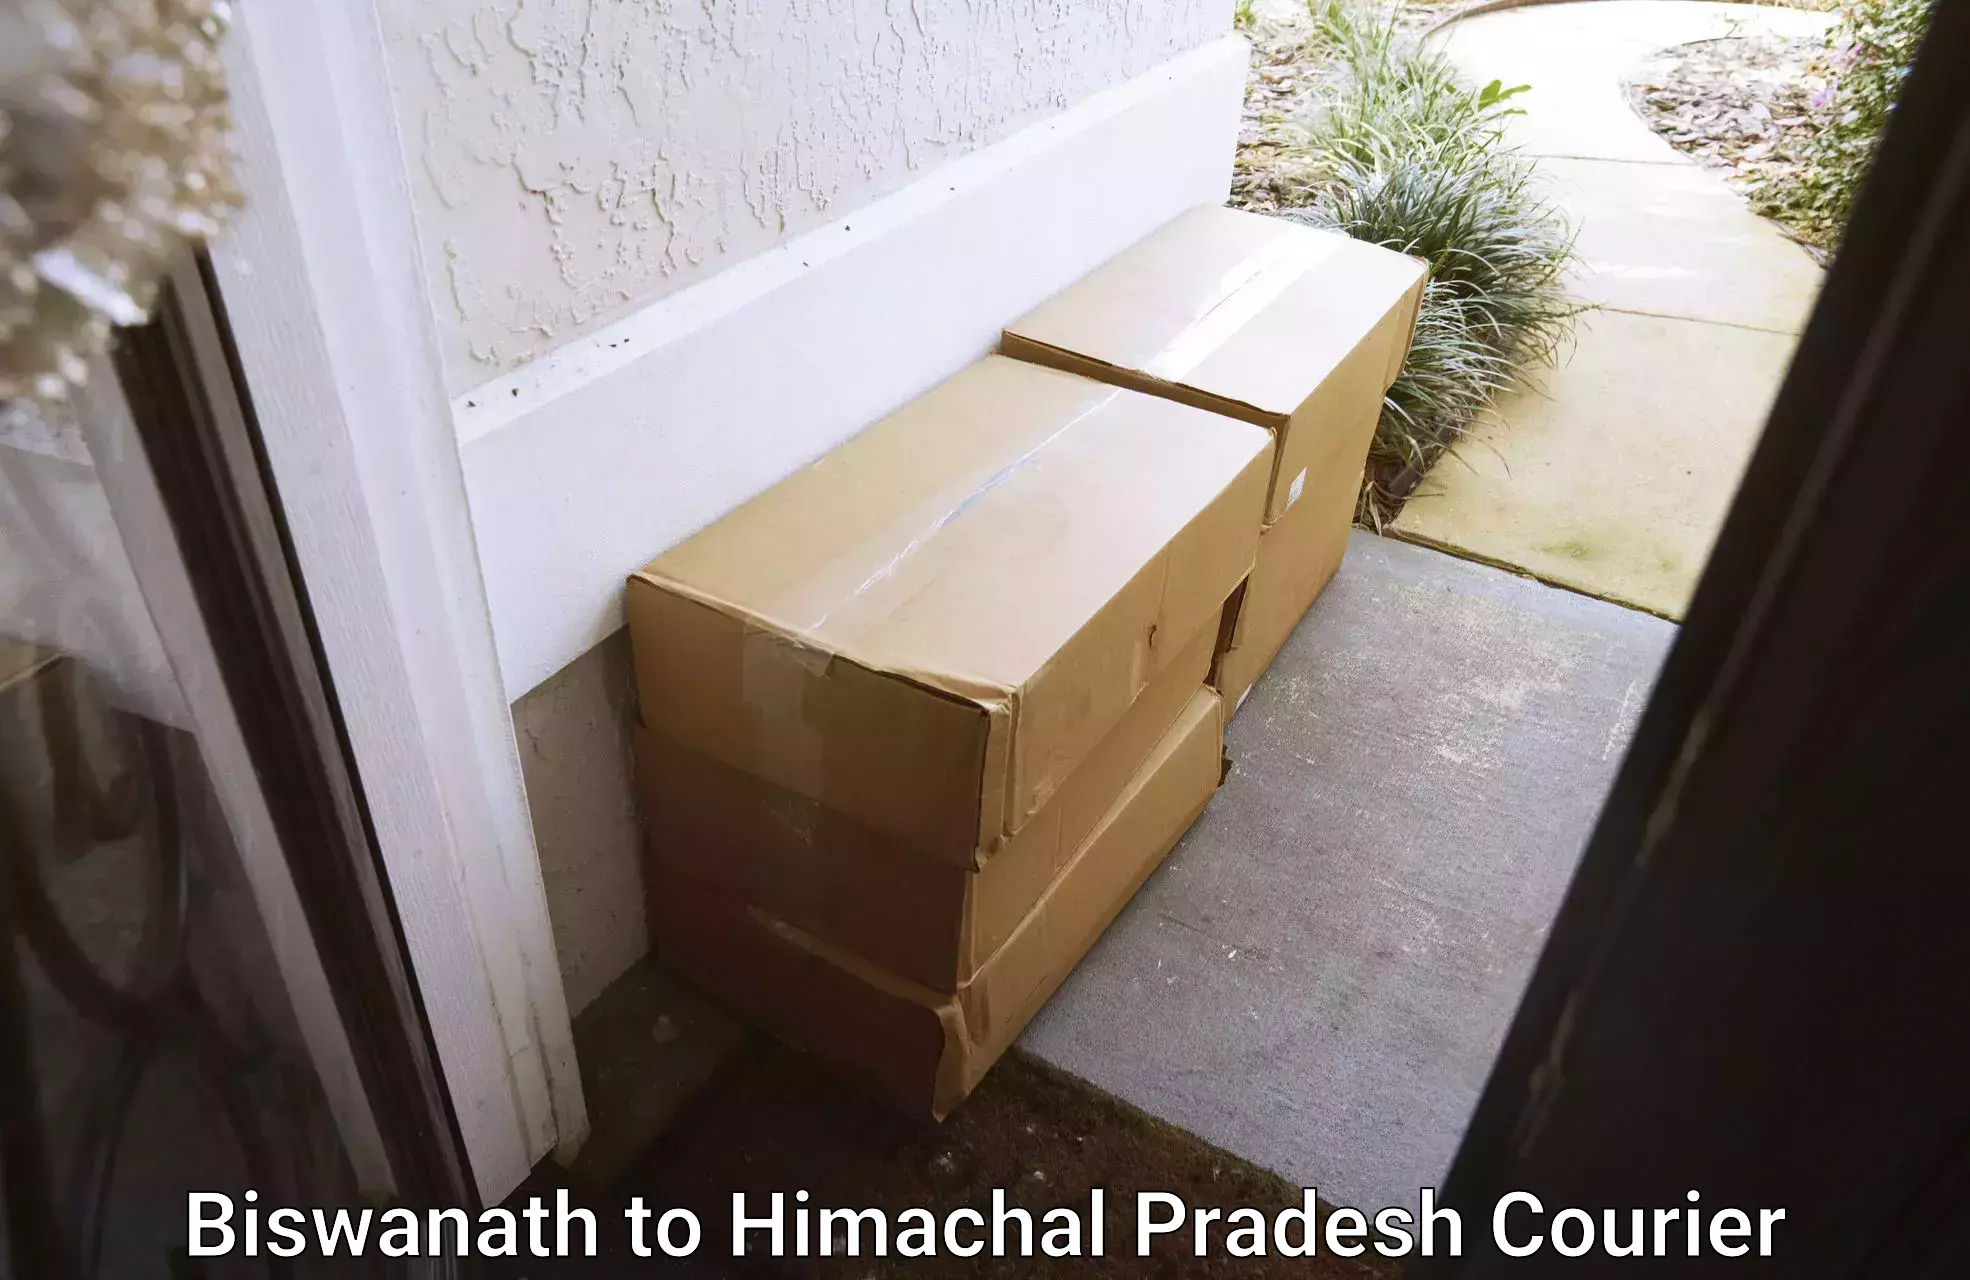 Express package handling in Biswanath to Himachal Pradesh